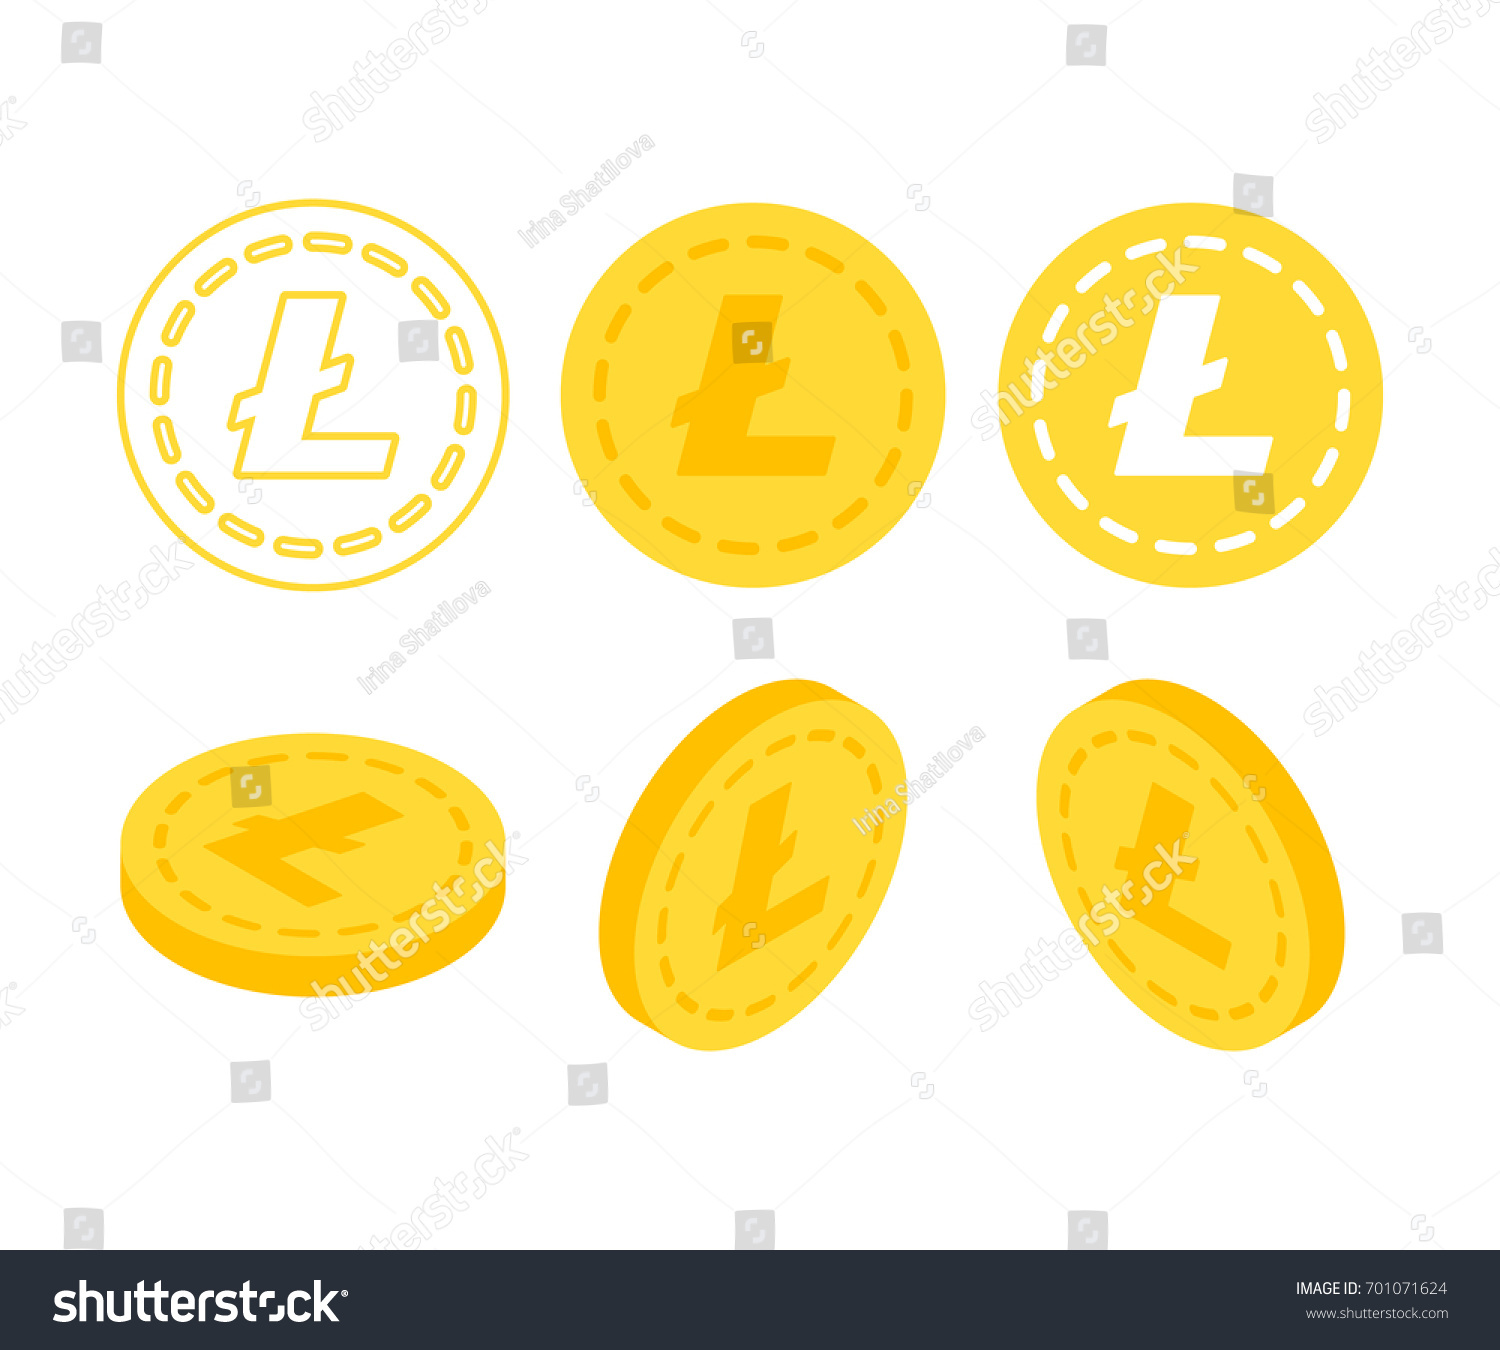 litecoin or bitcoin cash